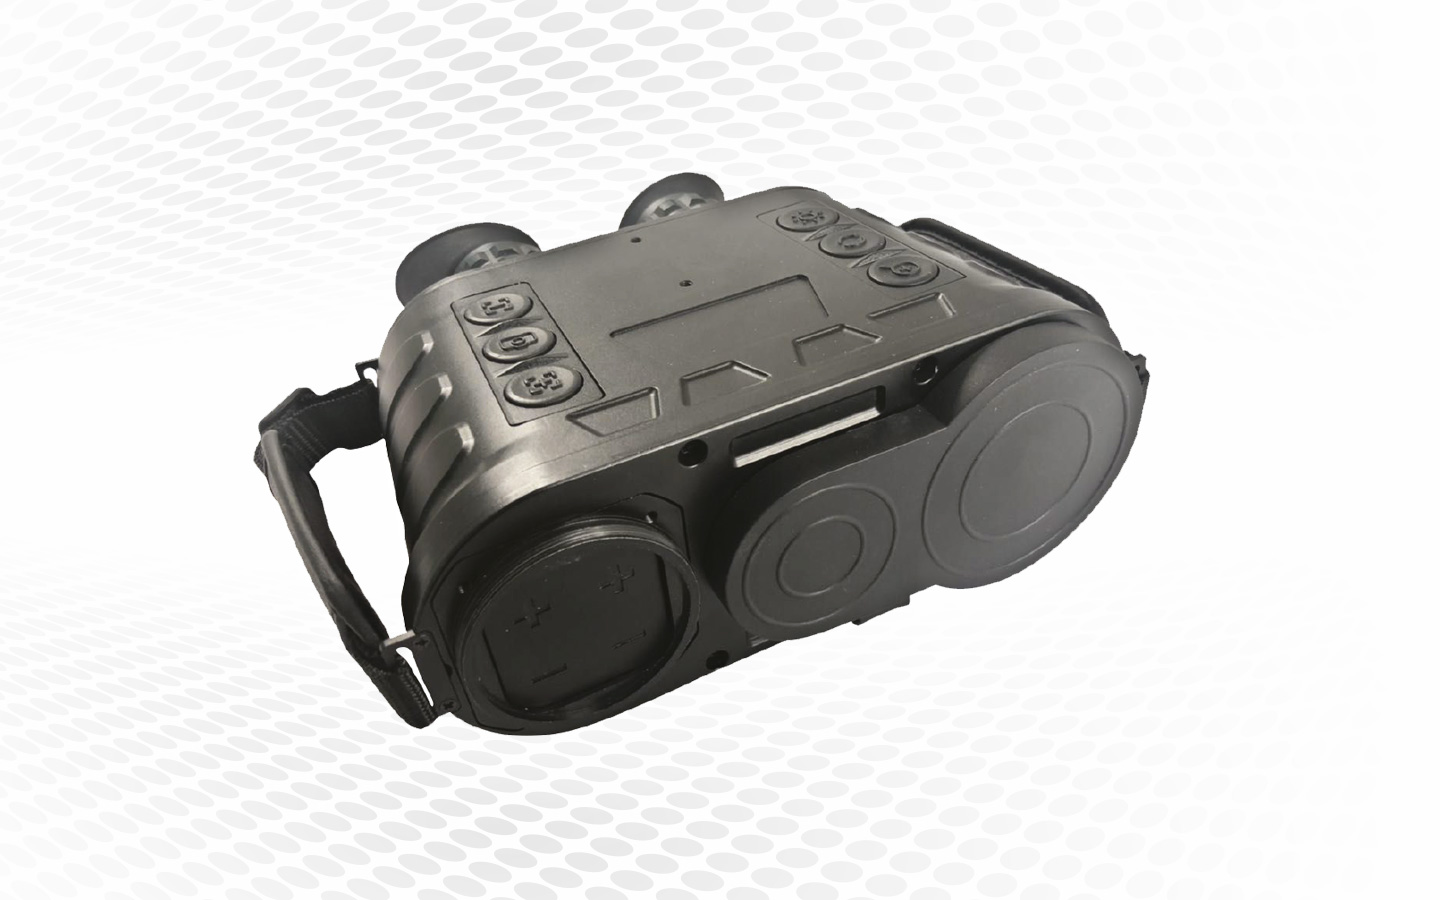 TV Qeye 007 B50 Fusion Thermal Binocular